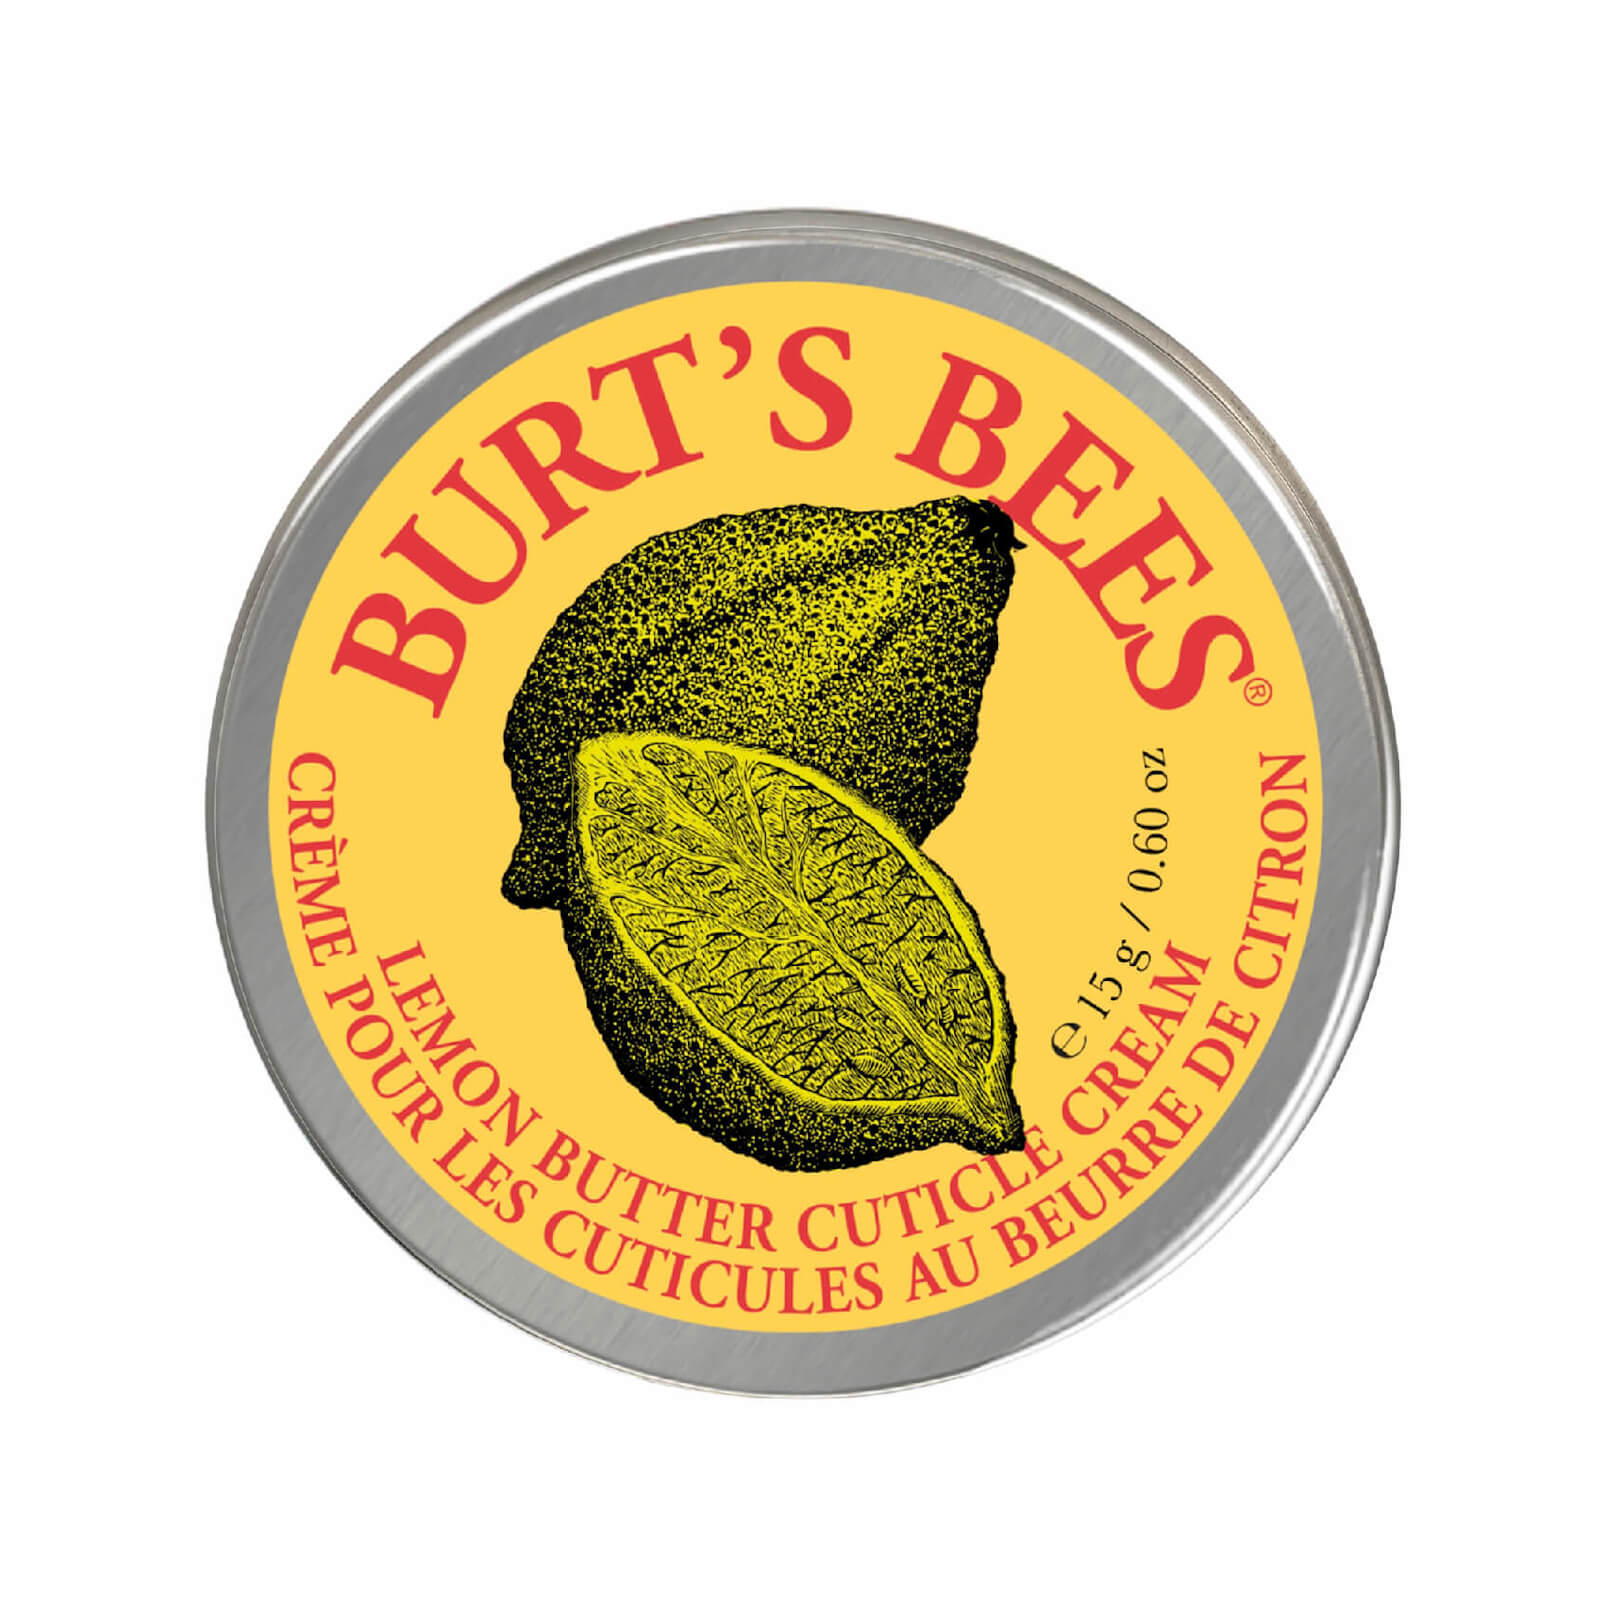 Image of Burt's Bees Lemon Butter Cuticle Creme (15g)